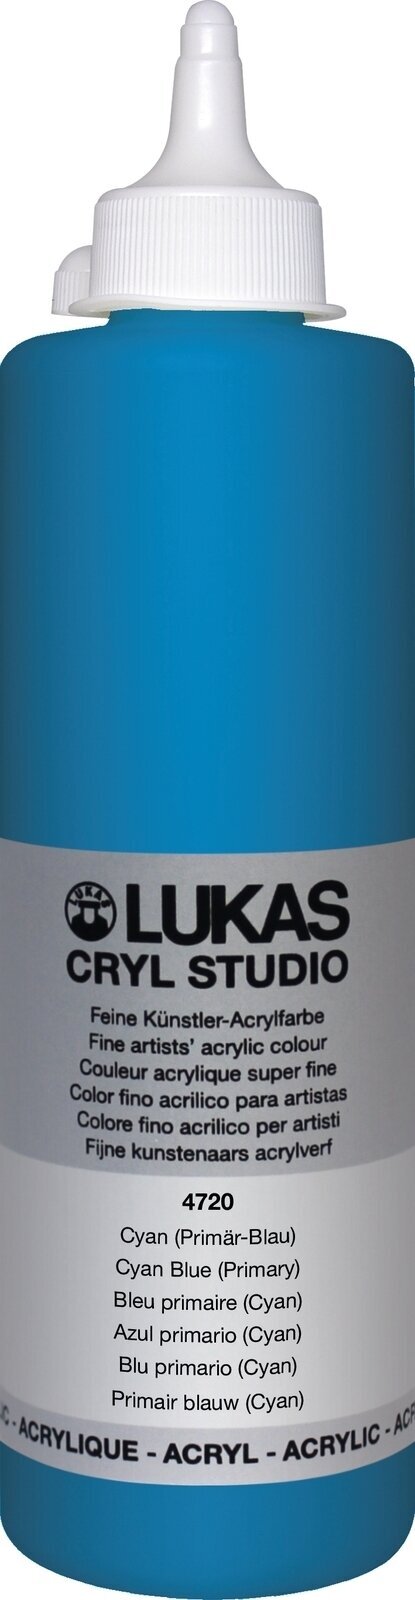 Akrylmaling Lukas Cryl Studio Akrylmaling 500 ml Cyan Blue (Primary)